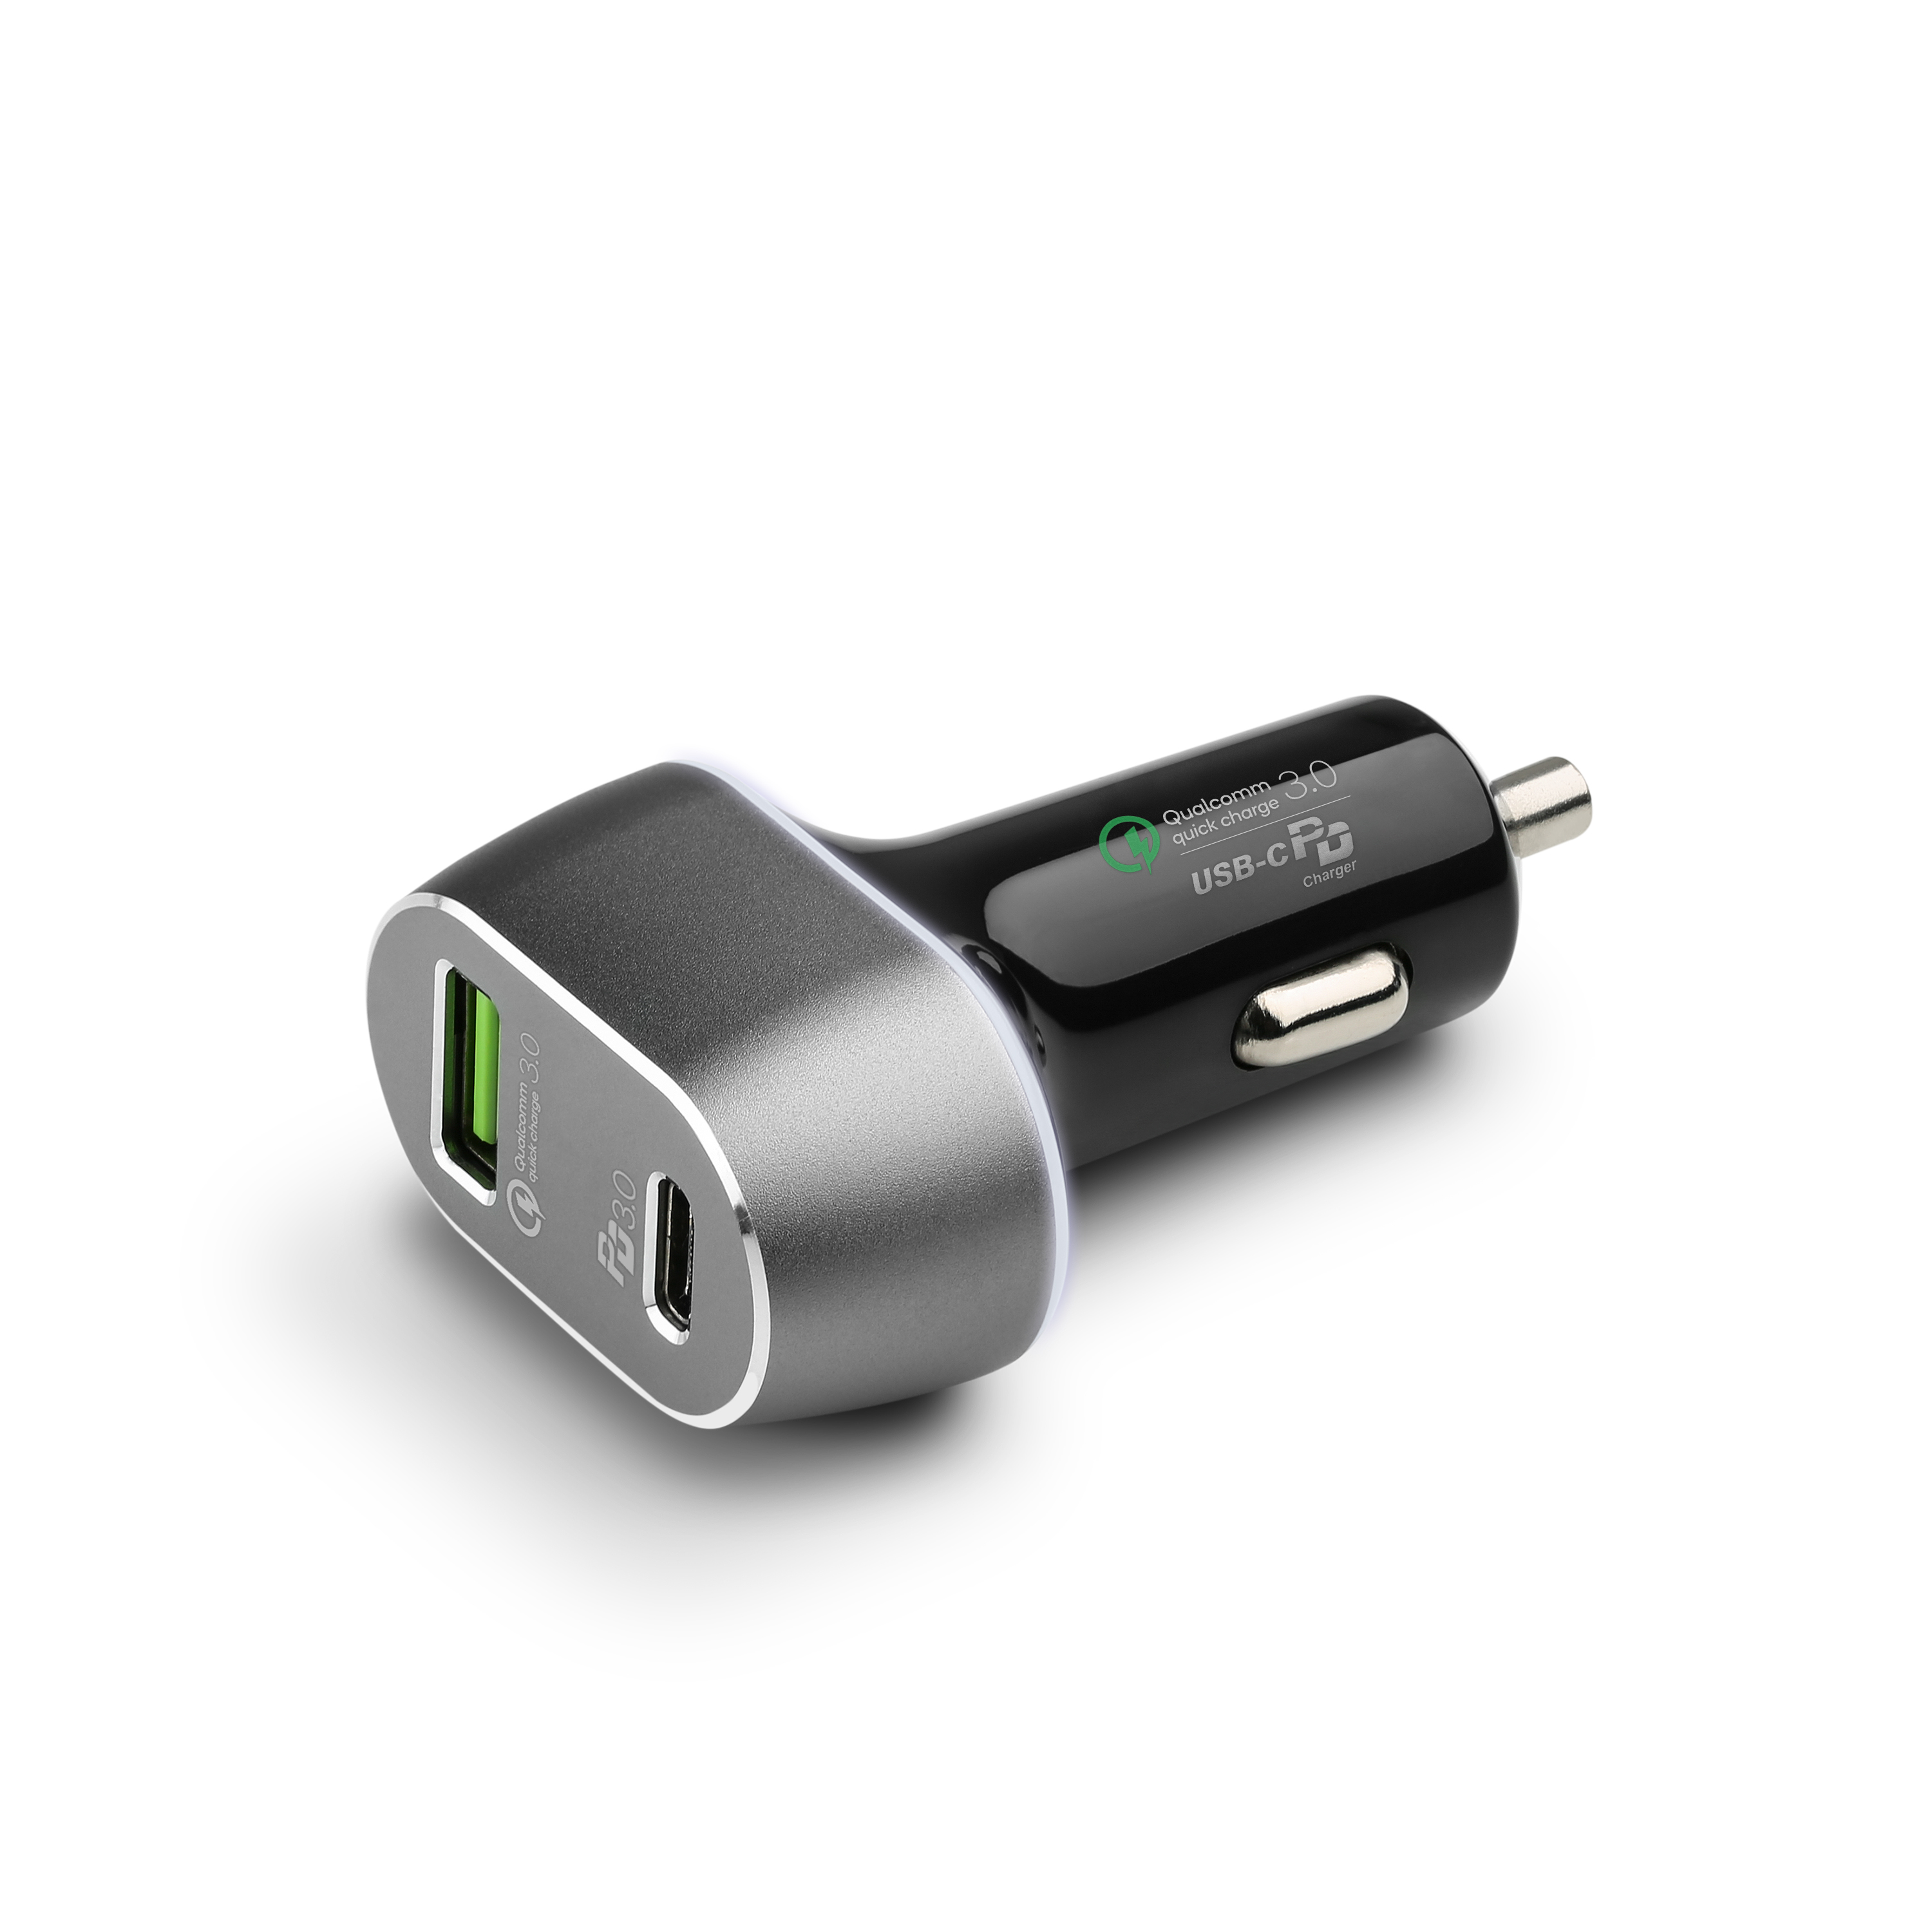 CSL 2-Port USB Charger LED 63W Universal, Ladegerät KFZ USB Car silber-schwarz